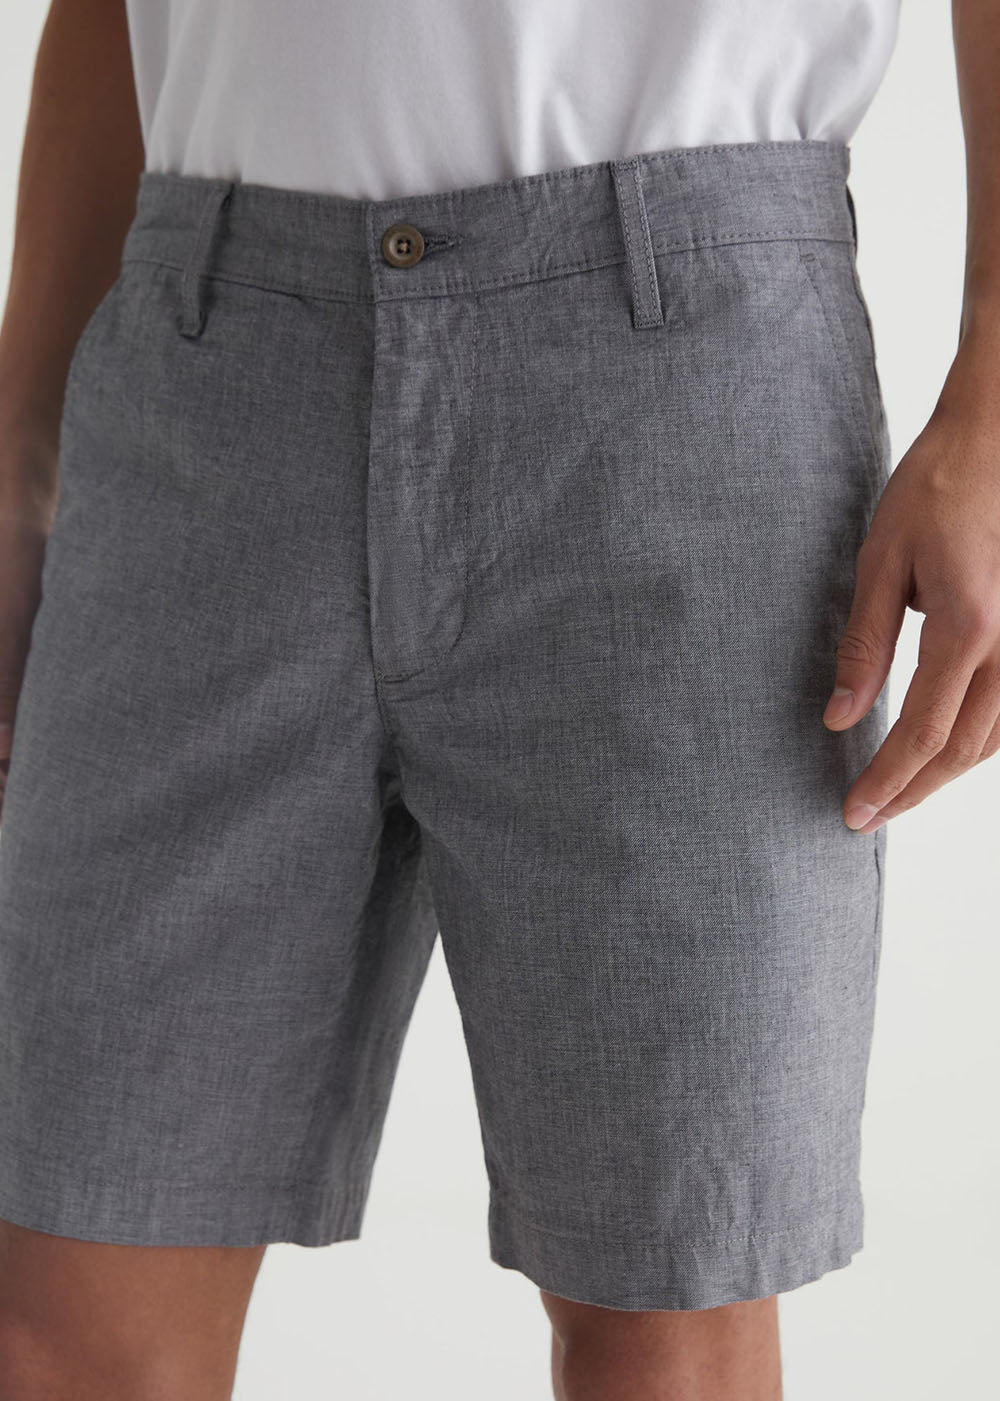 Wanderer Shorts - Moreton Bay - AG Jeans Canada - Danali - 1197PYCMORB